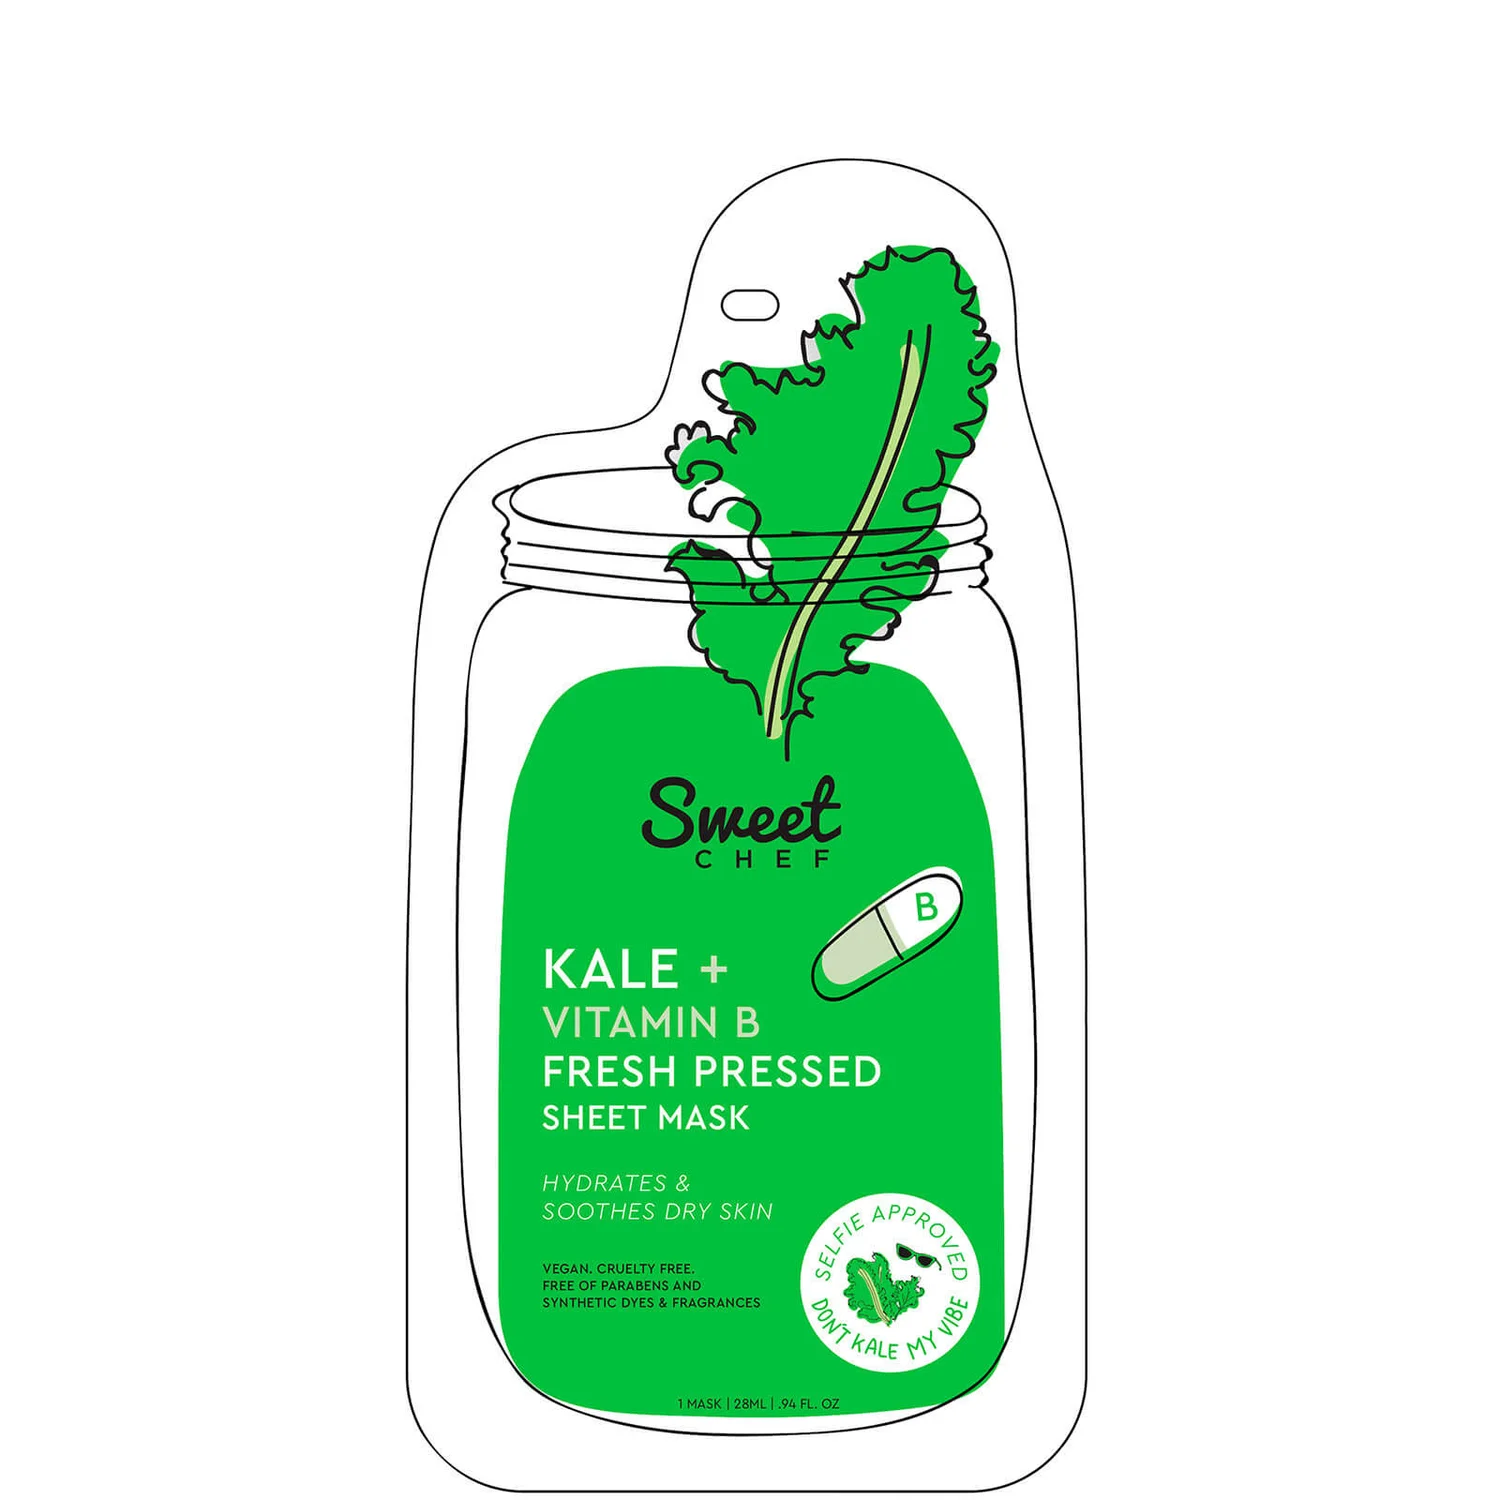 SWEET CHEF Kale + Vitamin B Fresh Pressed Sheet Mask £3.50 at Cult Beauty